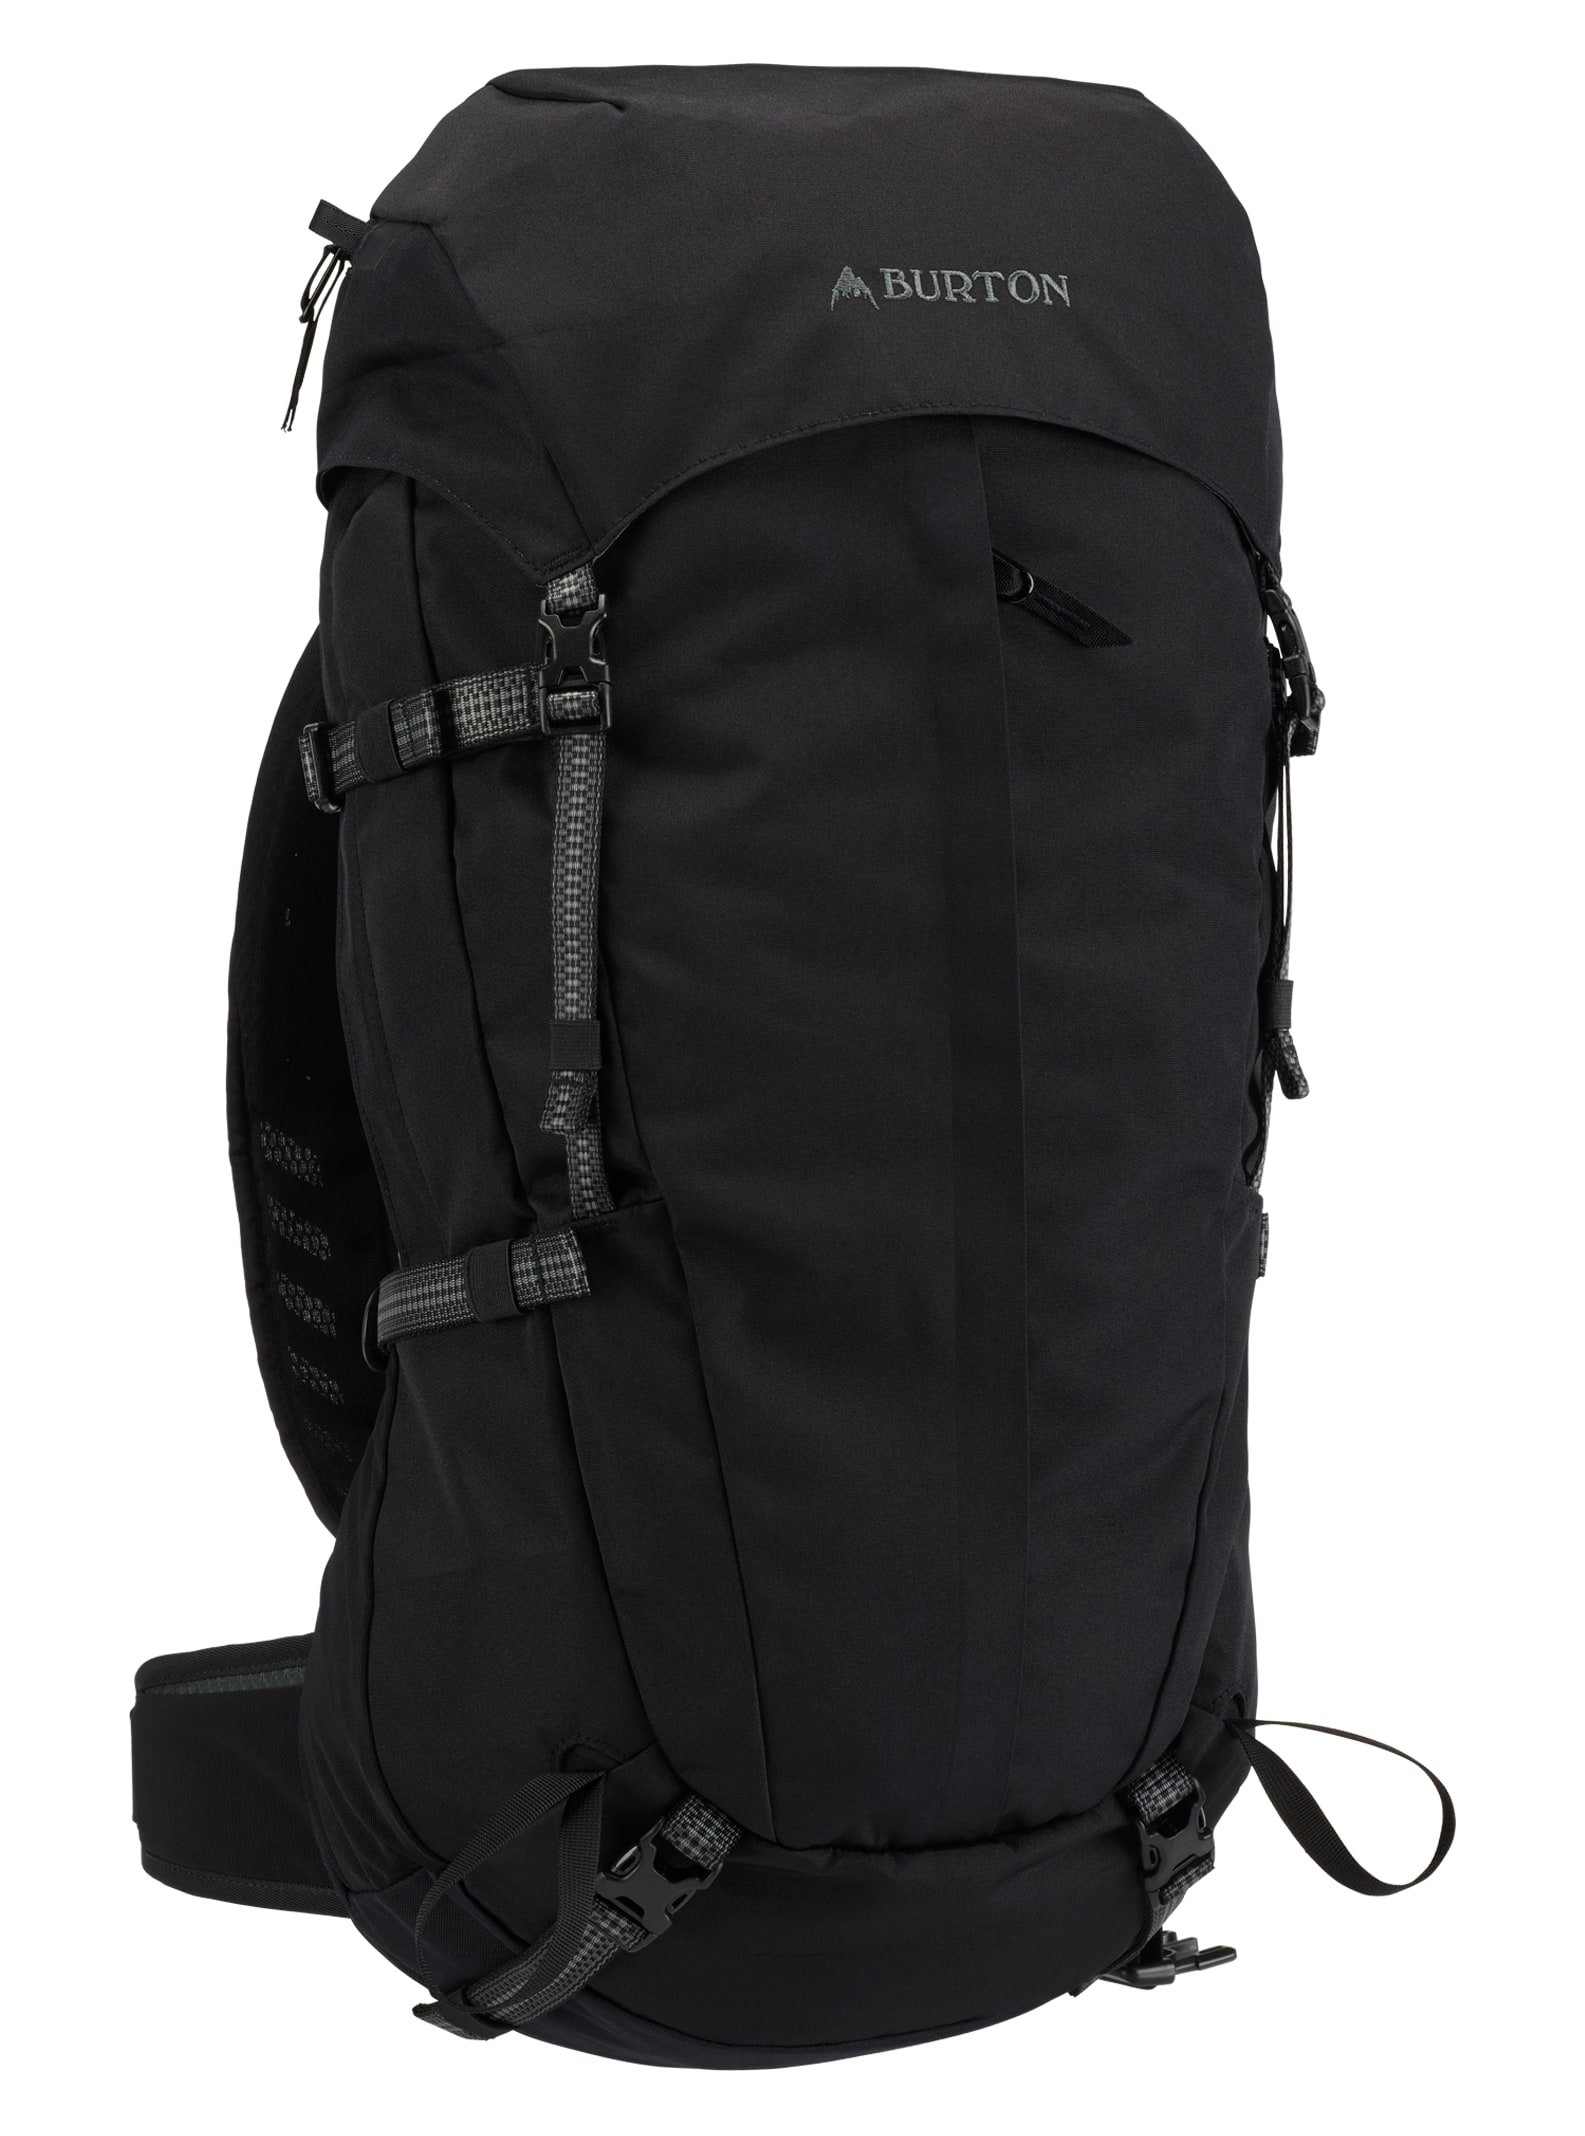 30l backpack